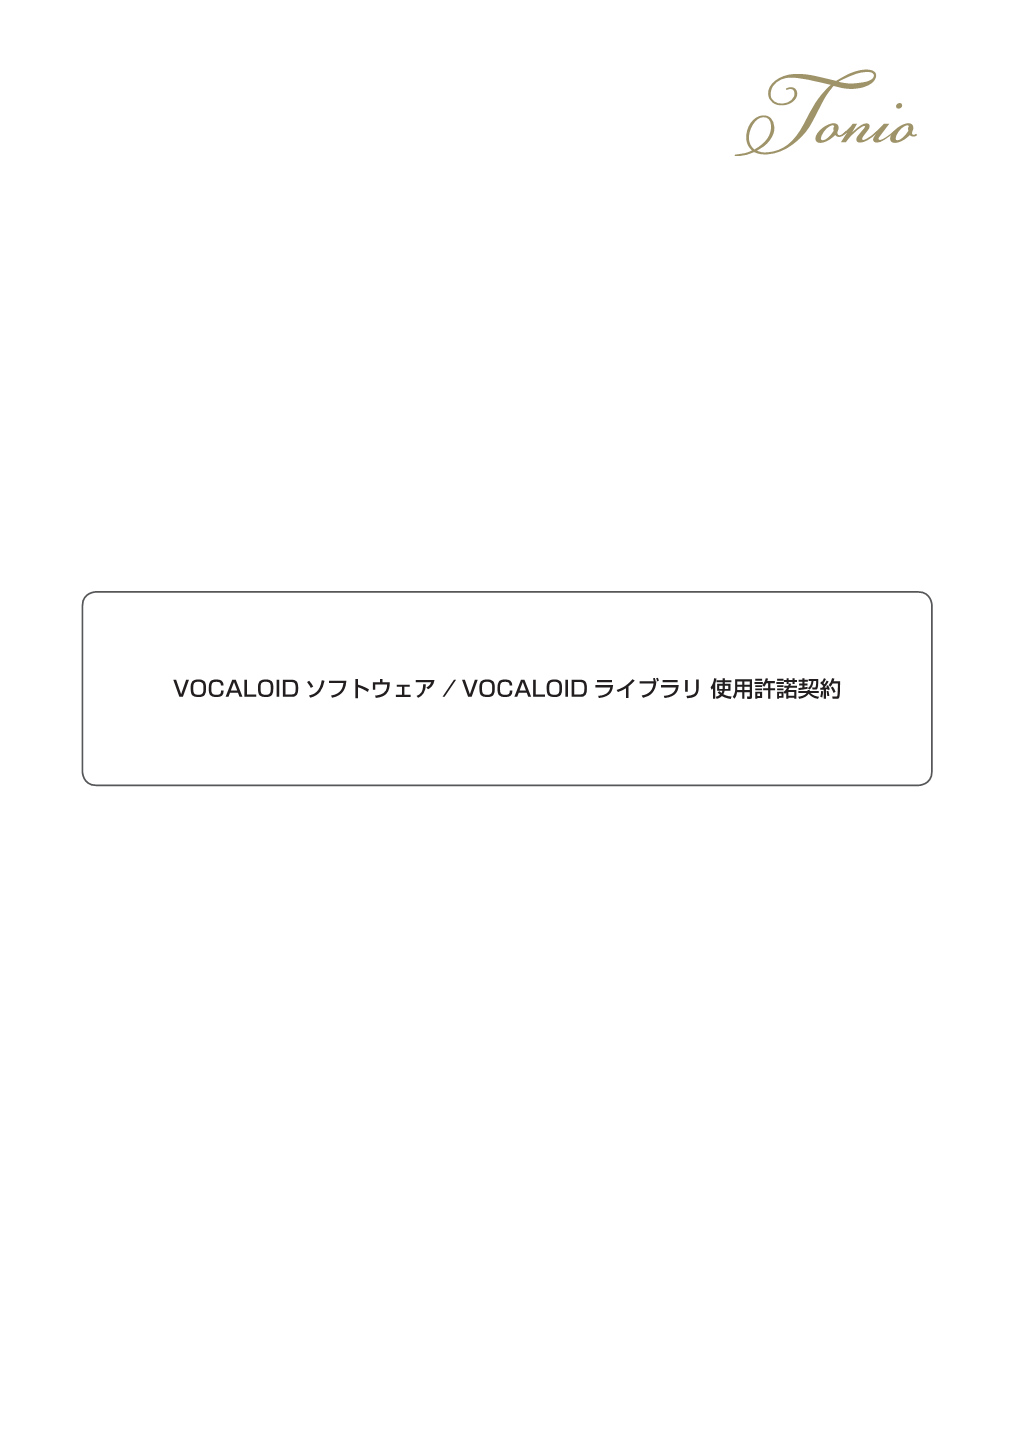 Vocaloidソフトウェア / Vocaloidライブラリ 使用許諾契約（Pdfファイル）